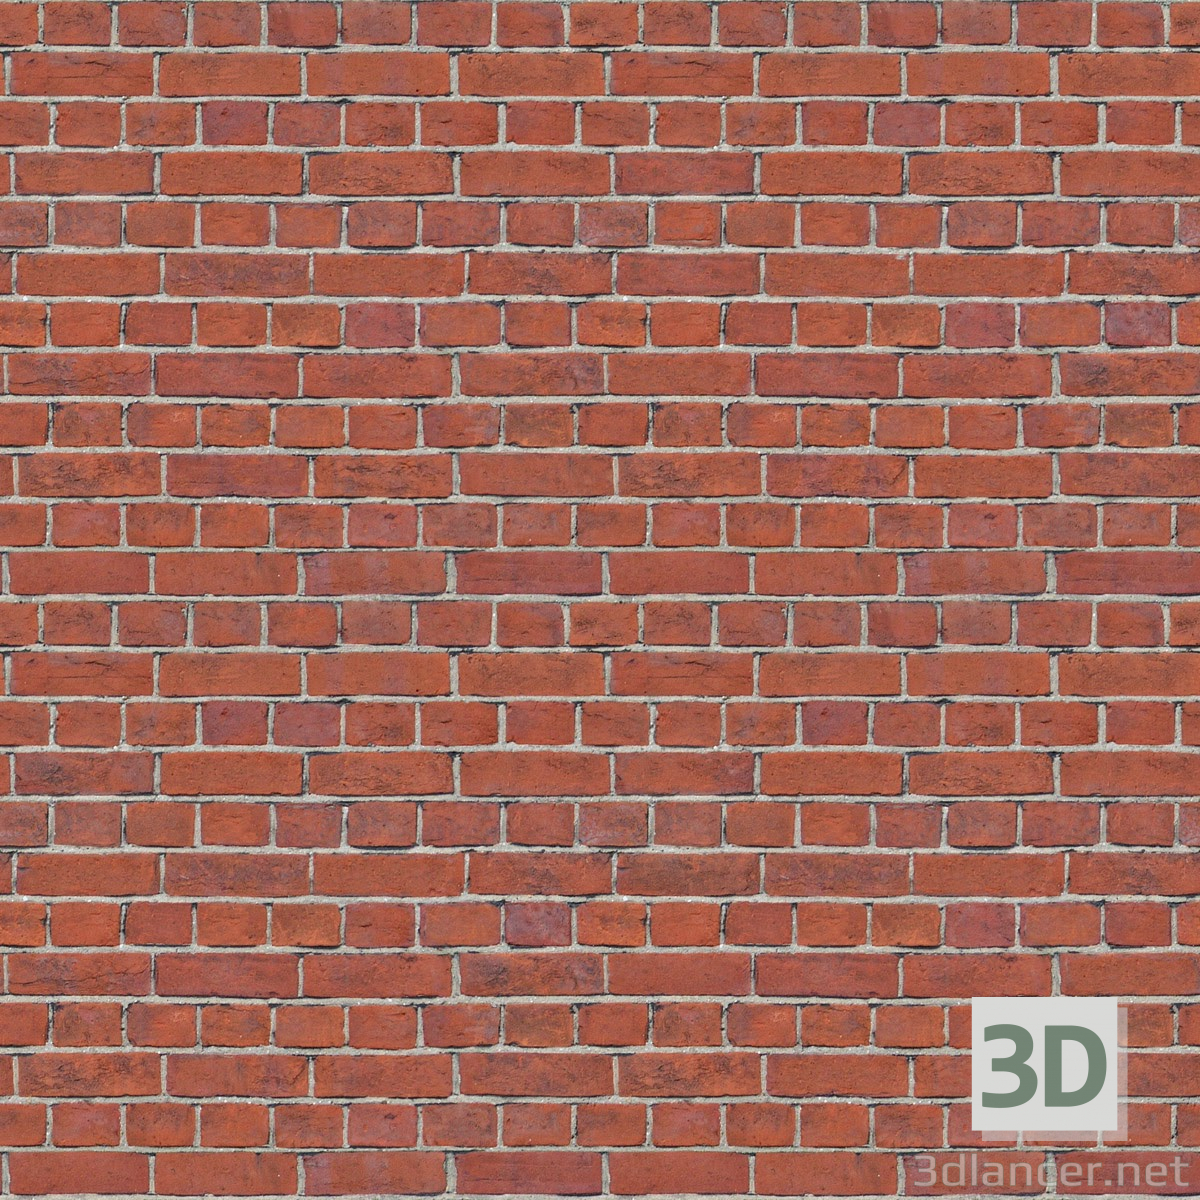 Texture brickwork 002 free download - image